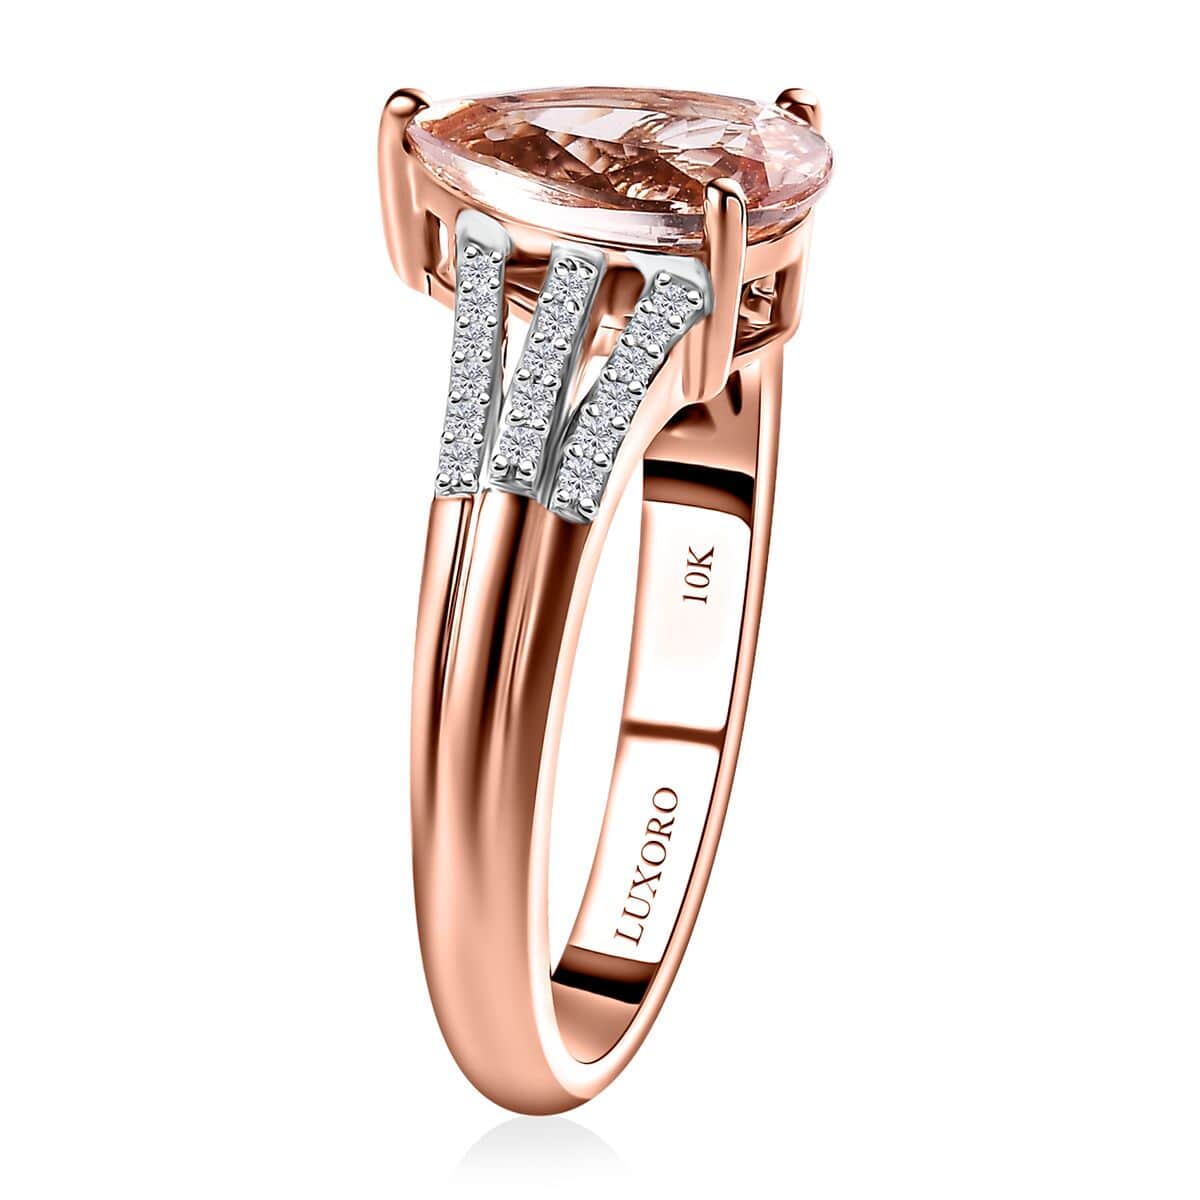 Luxoro 10K Rose Gold Premium Pink Morganite and Diamond Ring (Size 7.0) 1.75 ctw image number 2